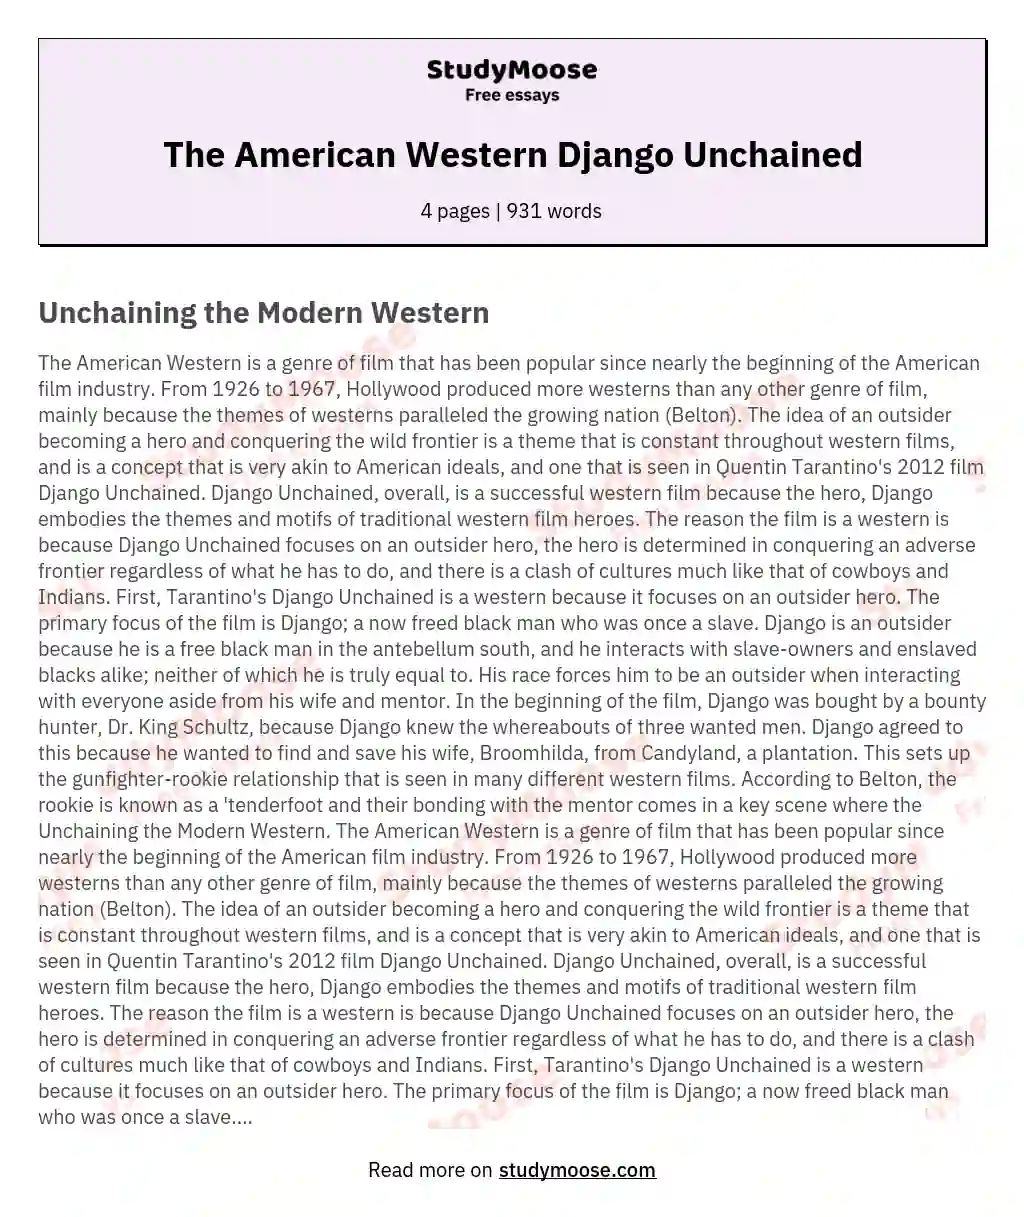 The American Western Django Unchained essay